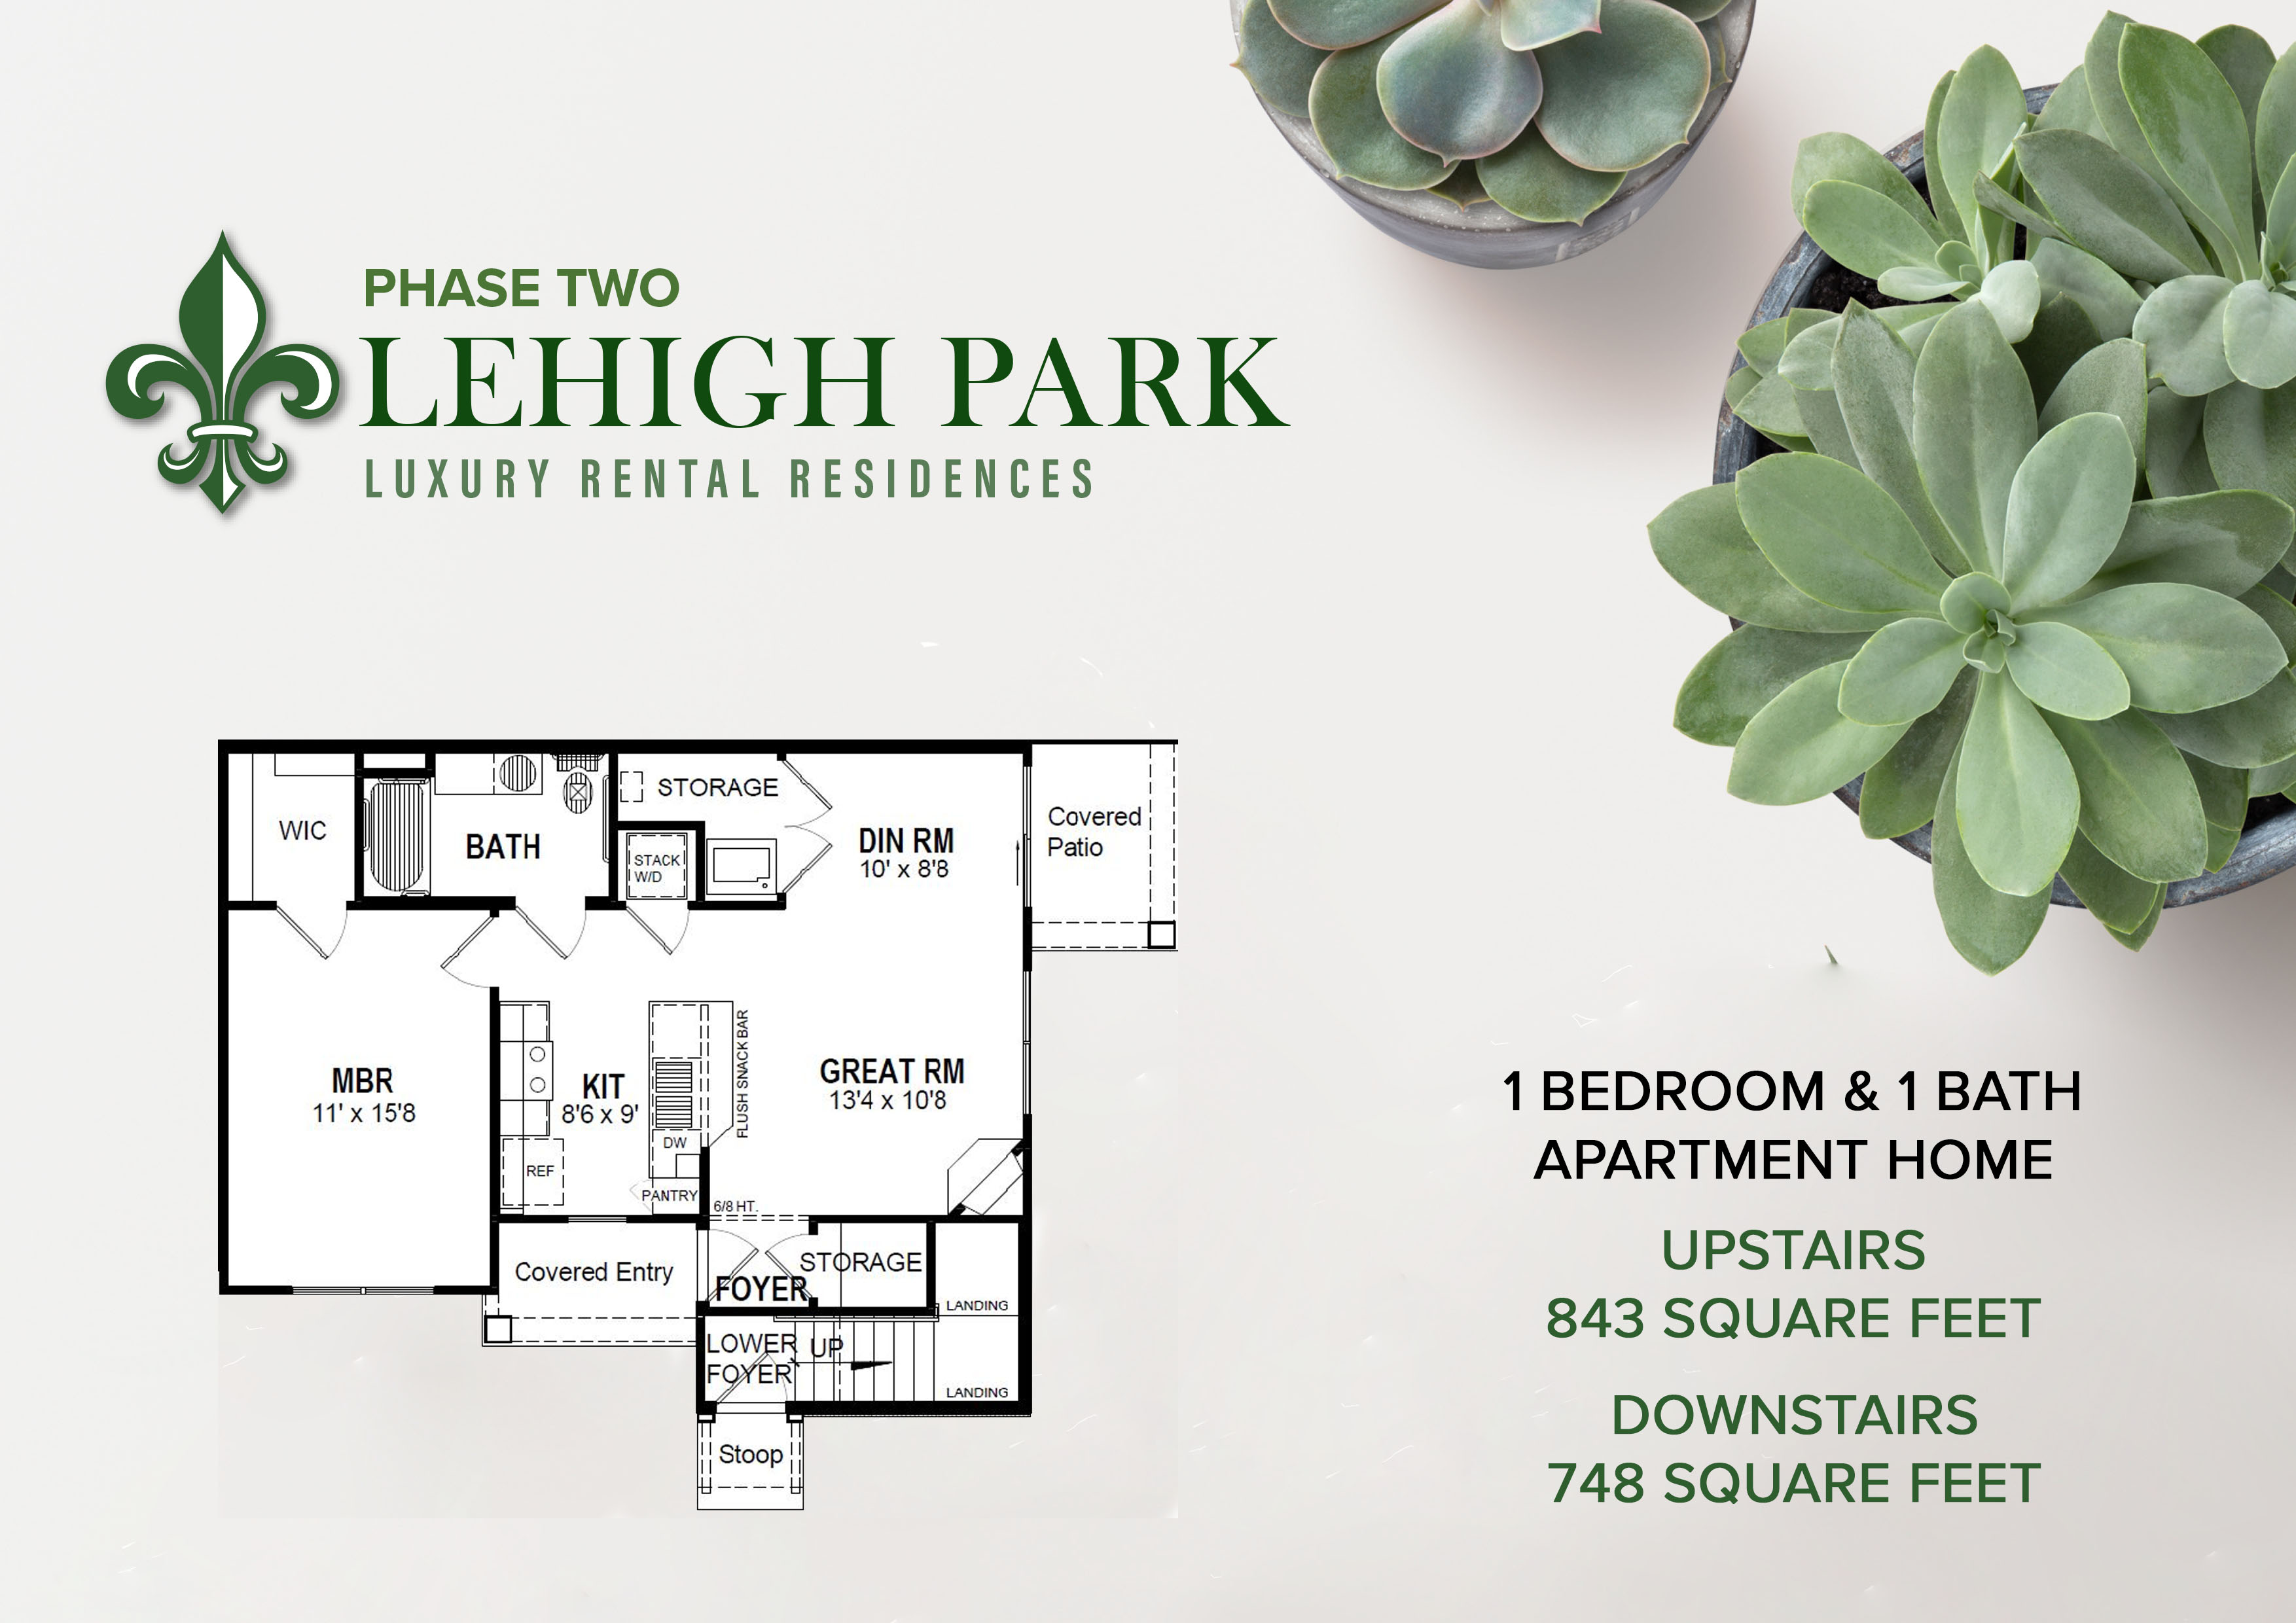 Lehigh Park Luxury Apartments - Floorplan - (Phase Two) 1 Bedroom & 1 Bath Apartment Home